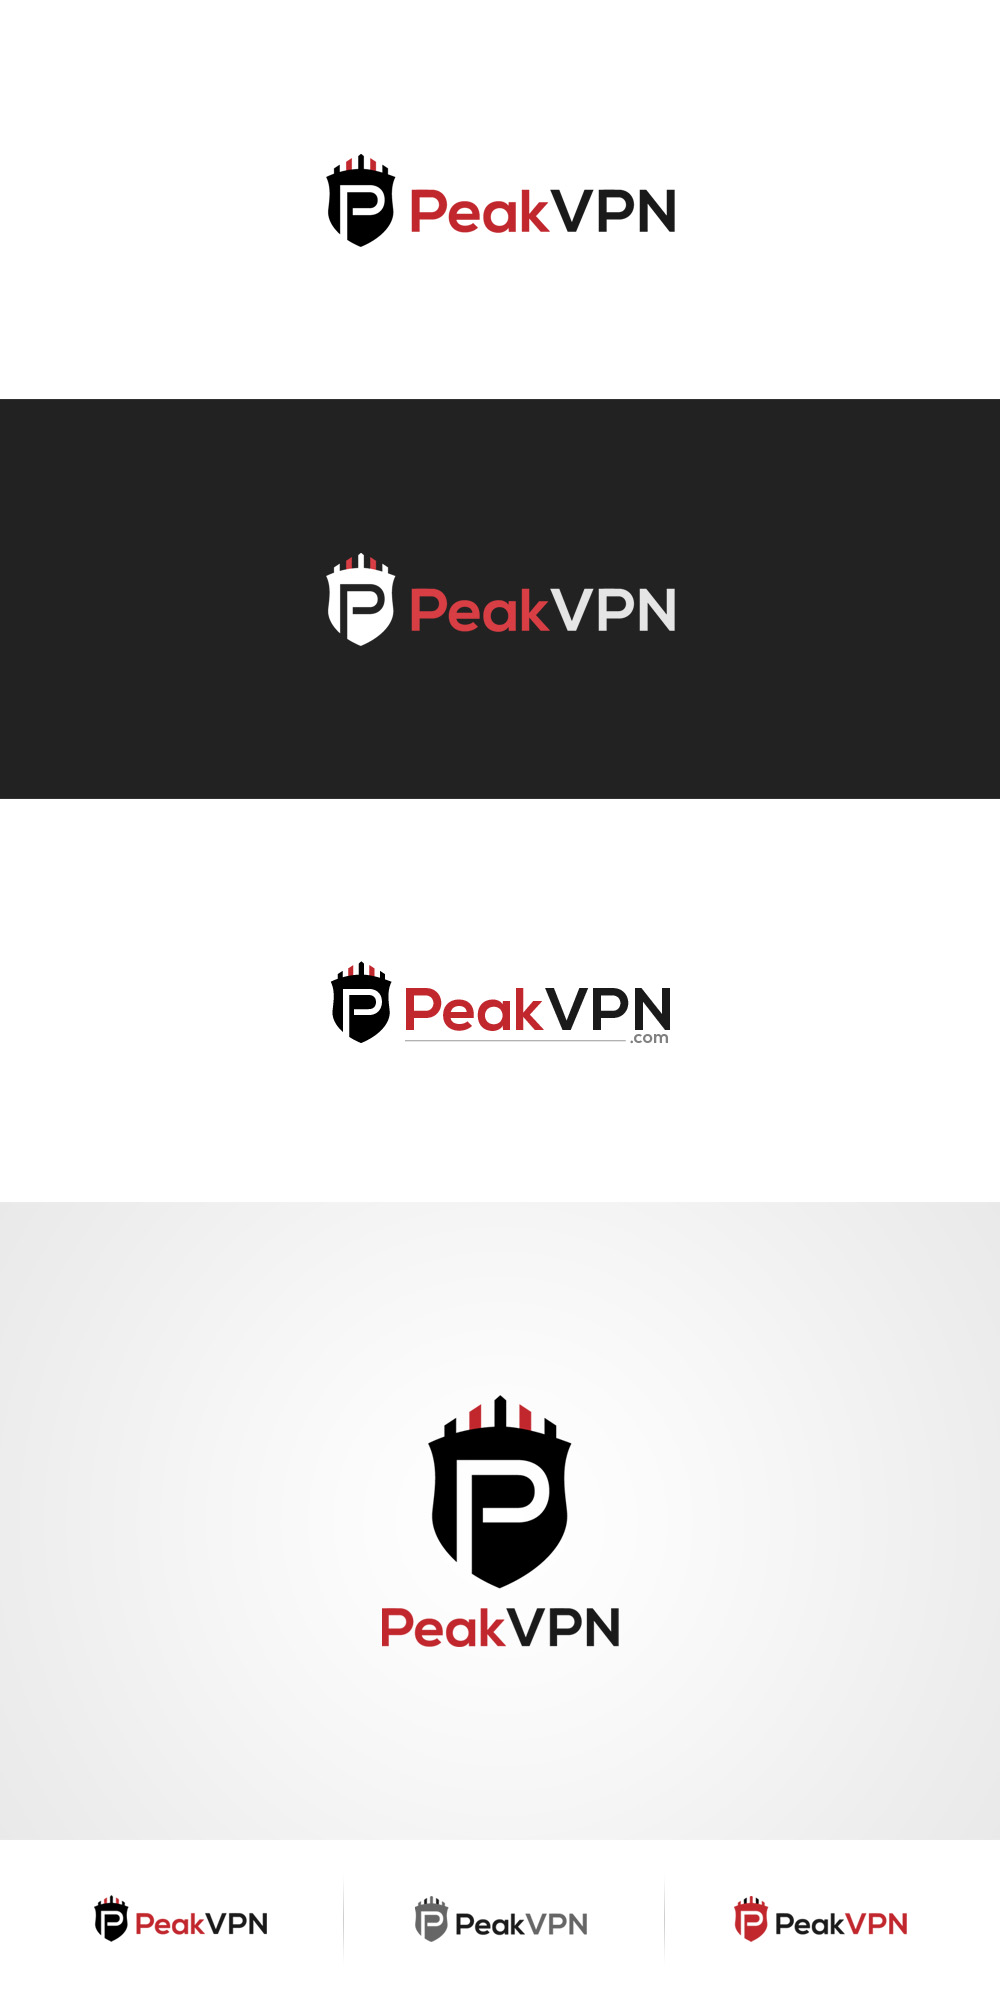 PeakVPN_preview2.jpg